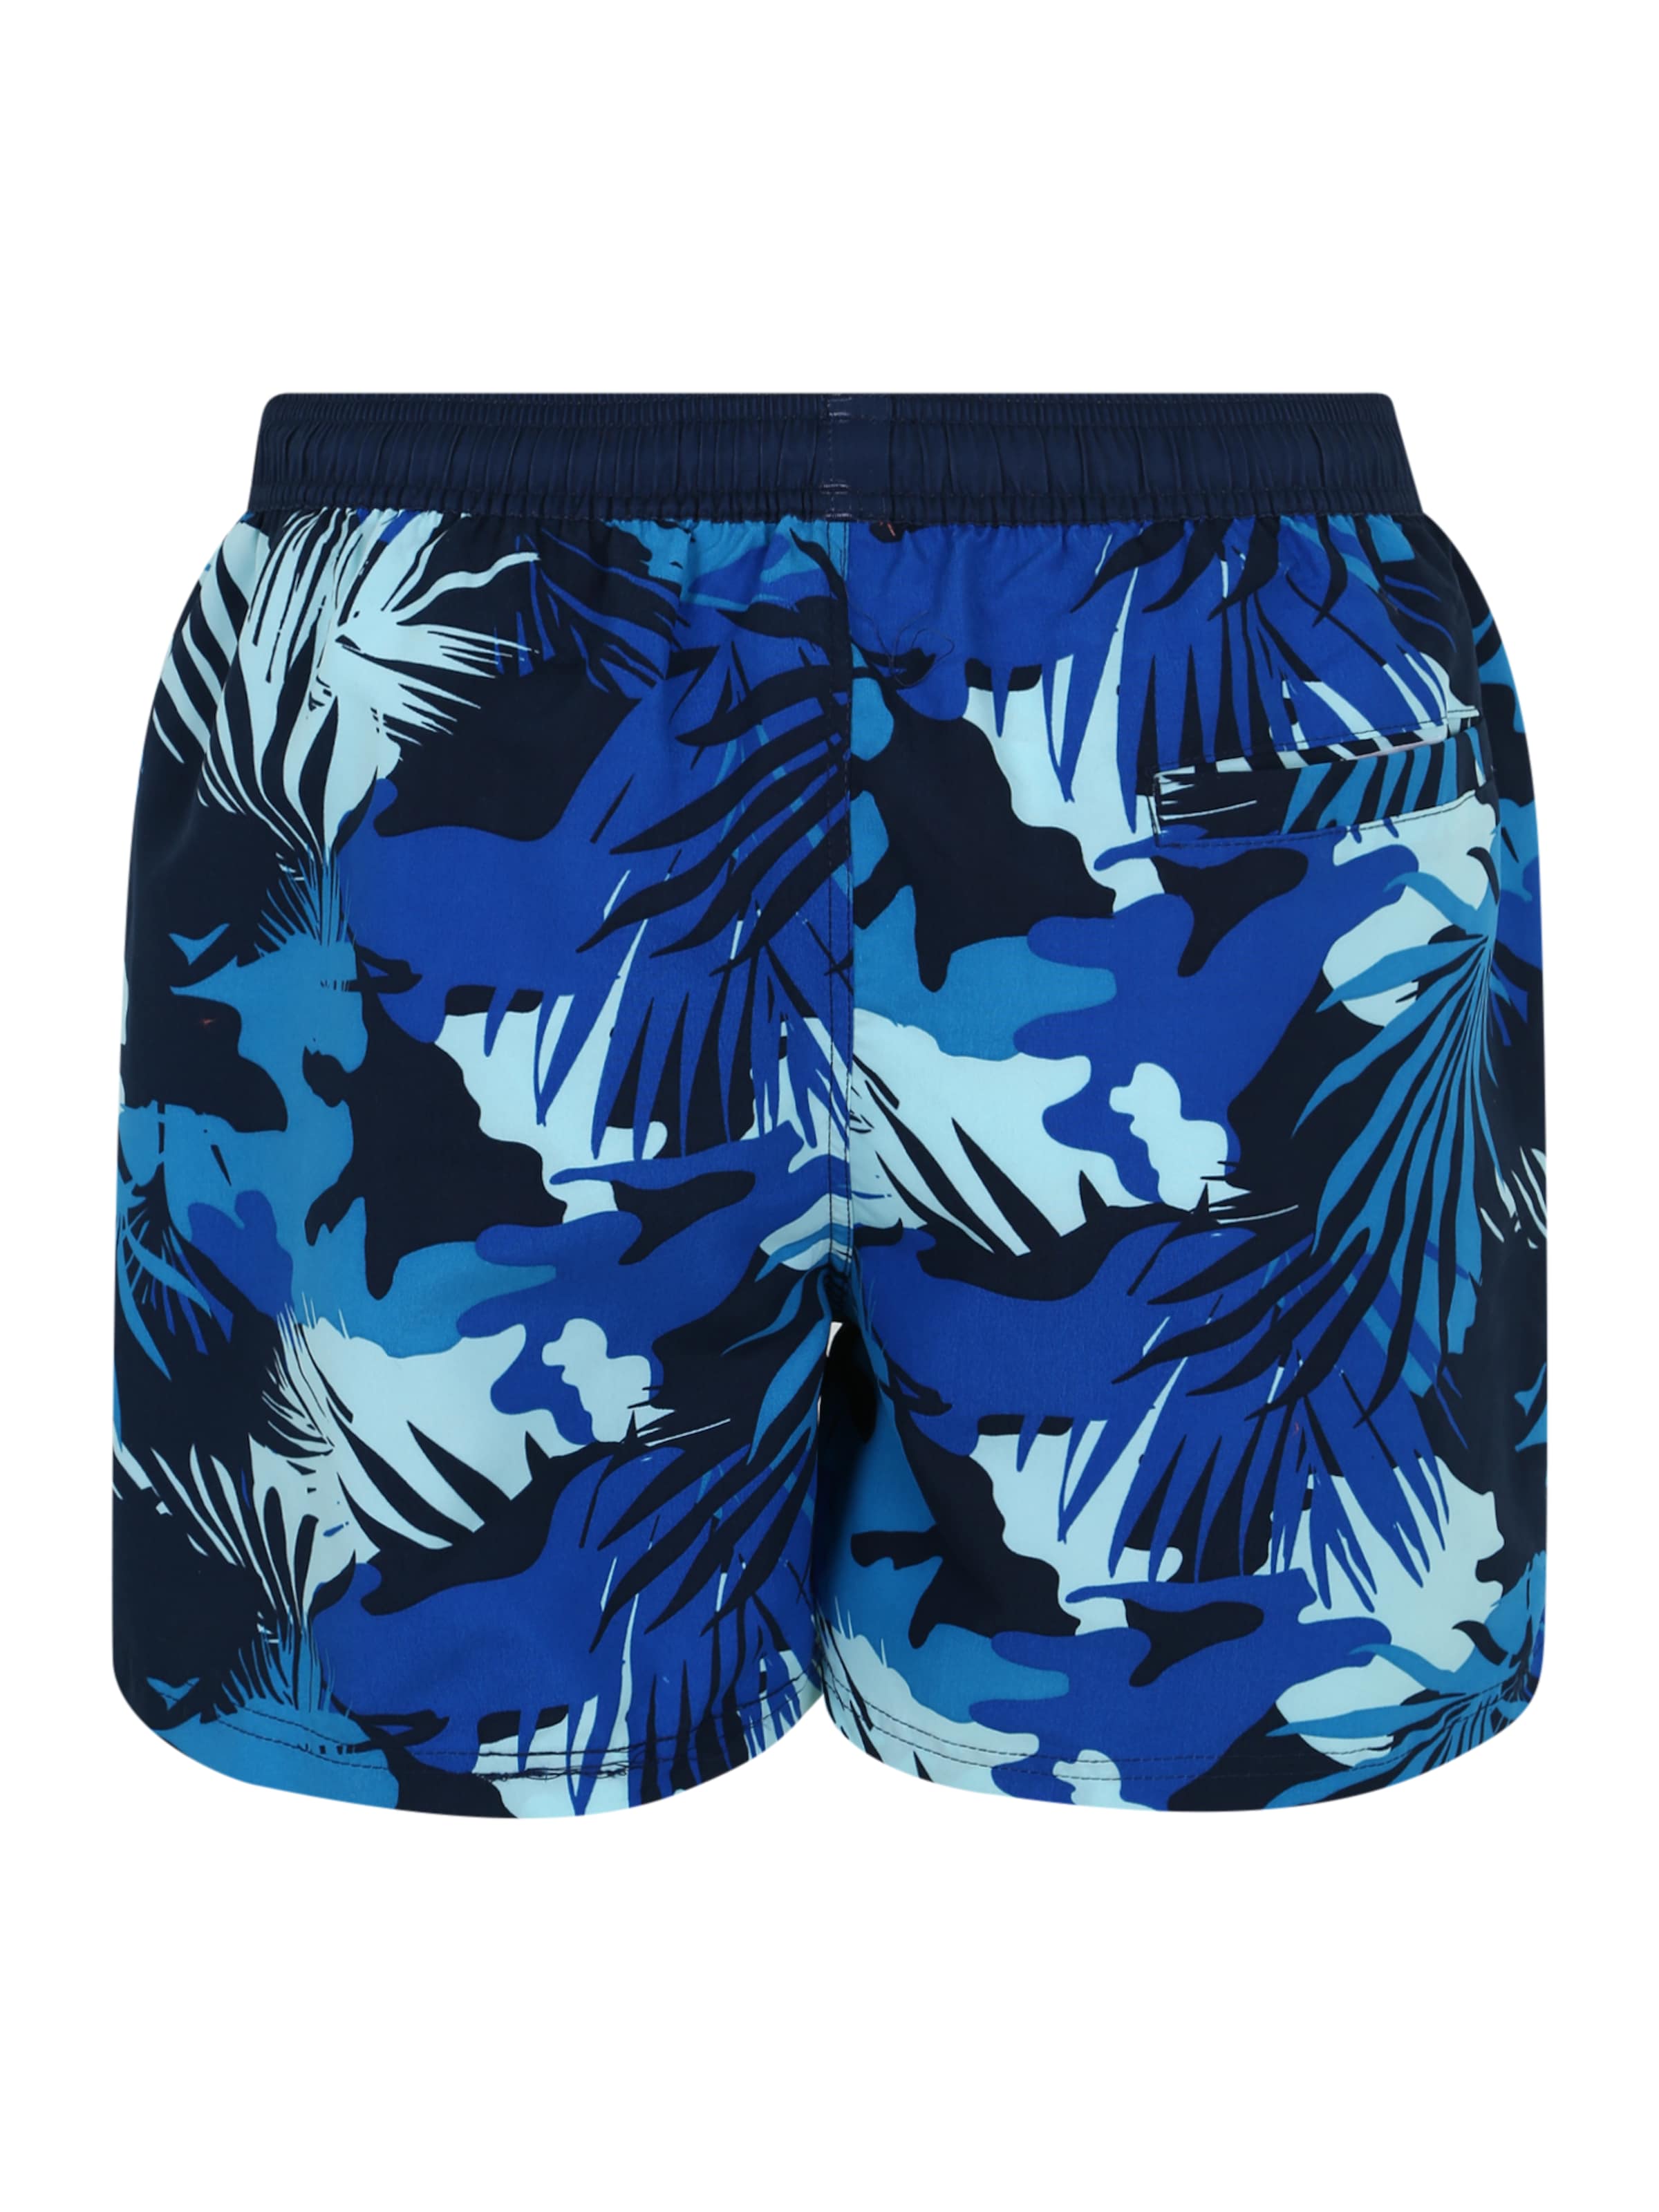 Vêtements Shorts de bain Lumos TOM TAILOR en Bleu Ciel, Bleu Roi, Bleu Nuit 